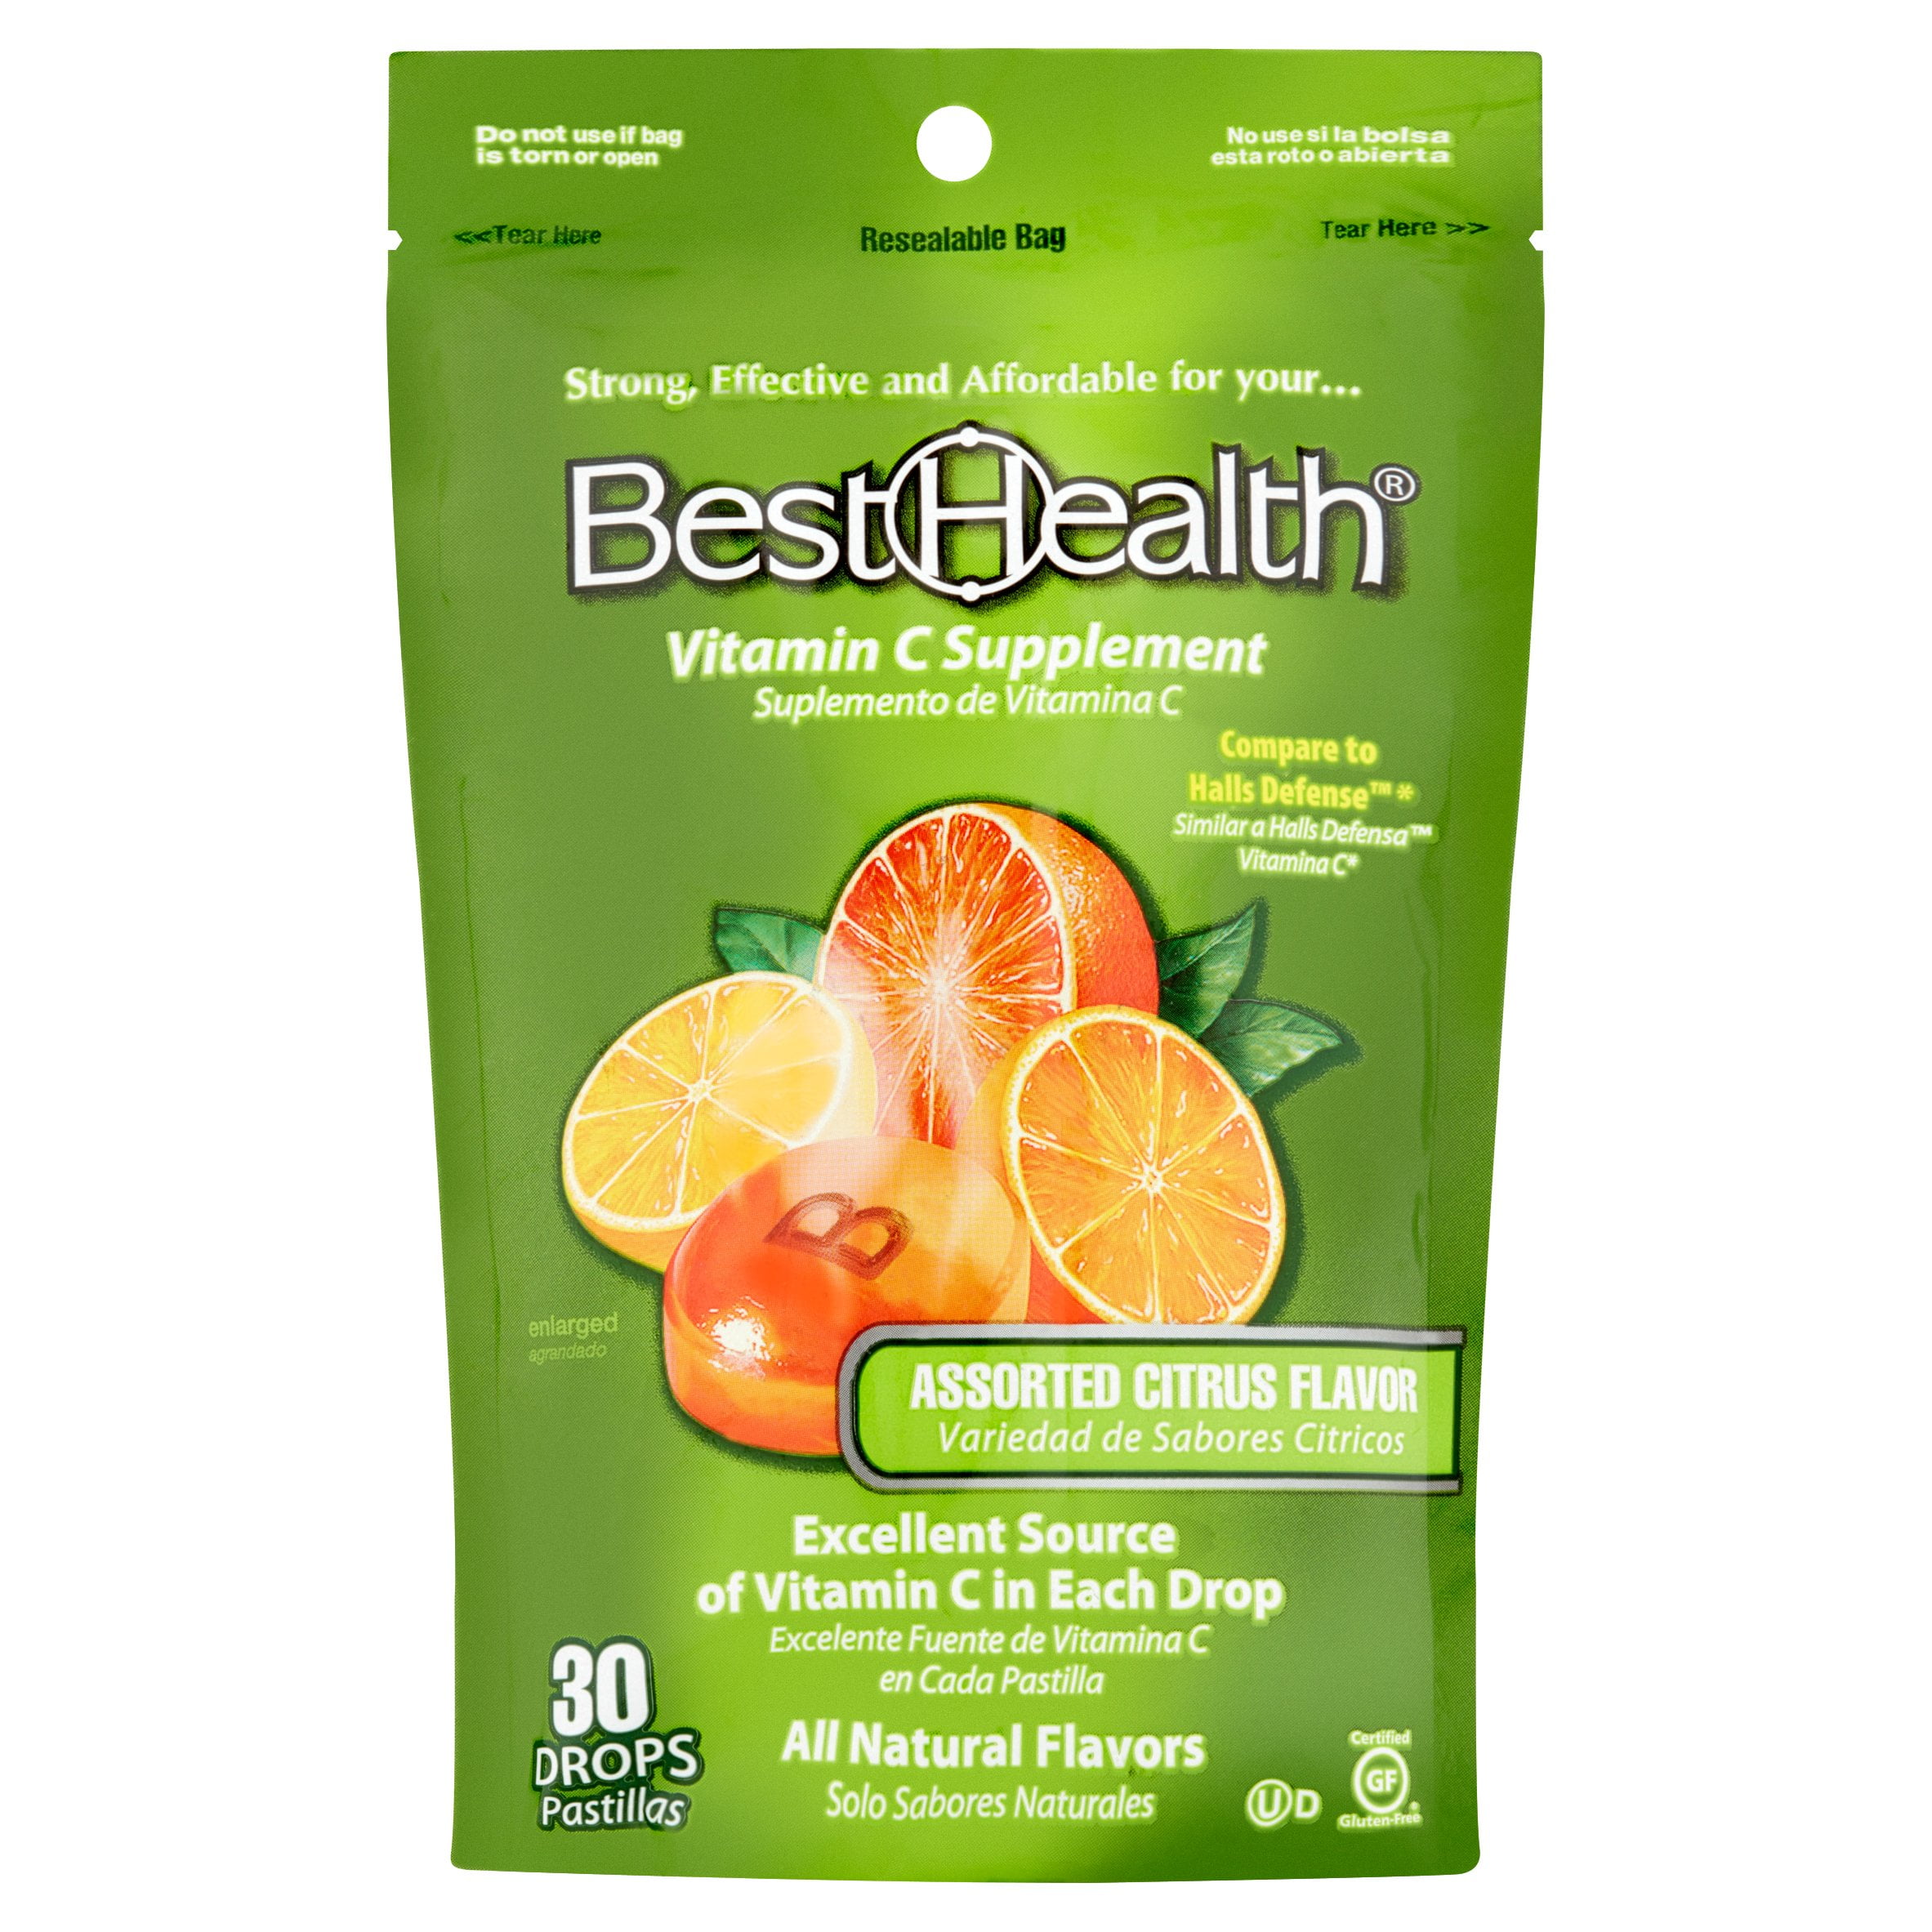 BestHealth Assorted Citrus Flavor Vitamin C Supplement 